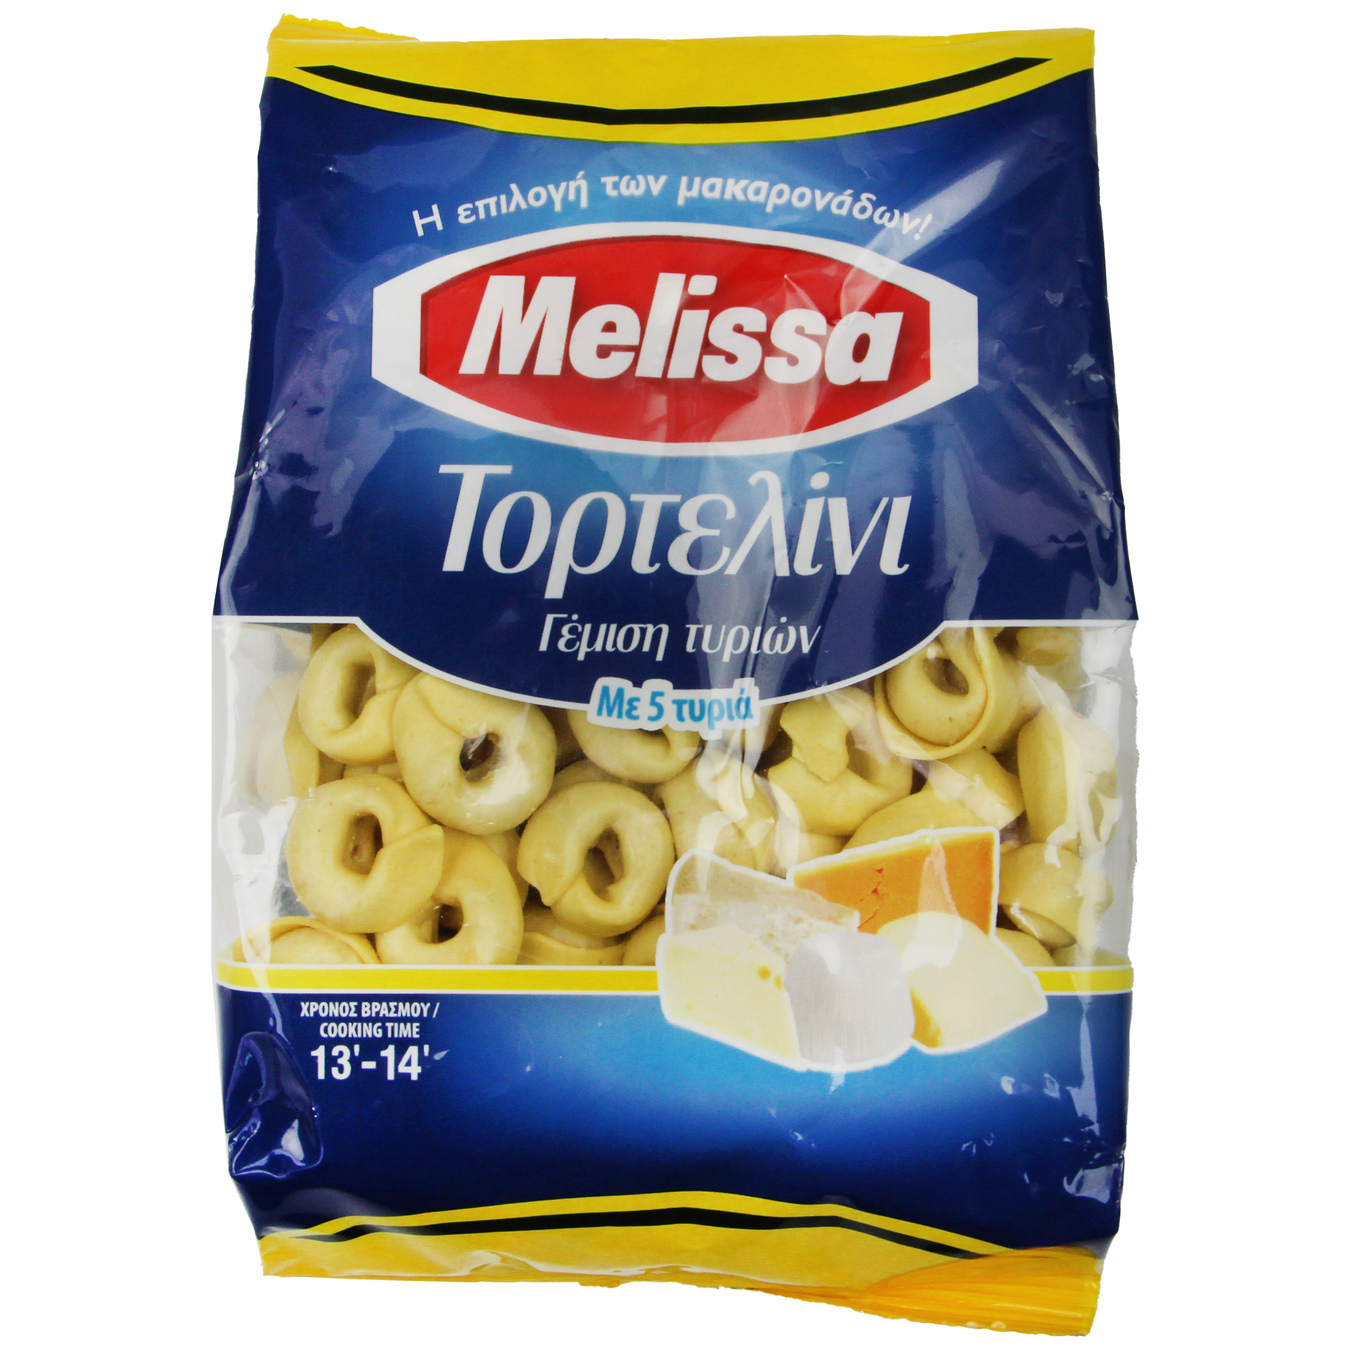 Макароны Melissa Tortellini 5 сыров яичные 250г